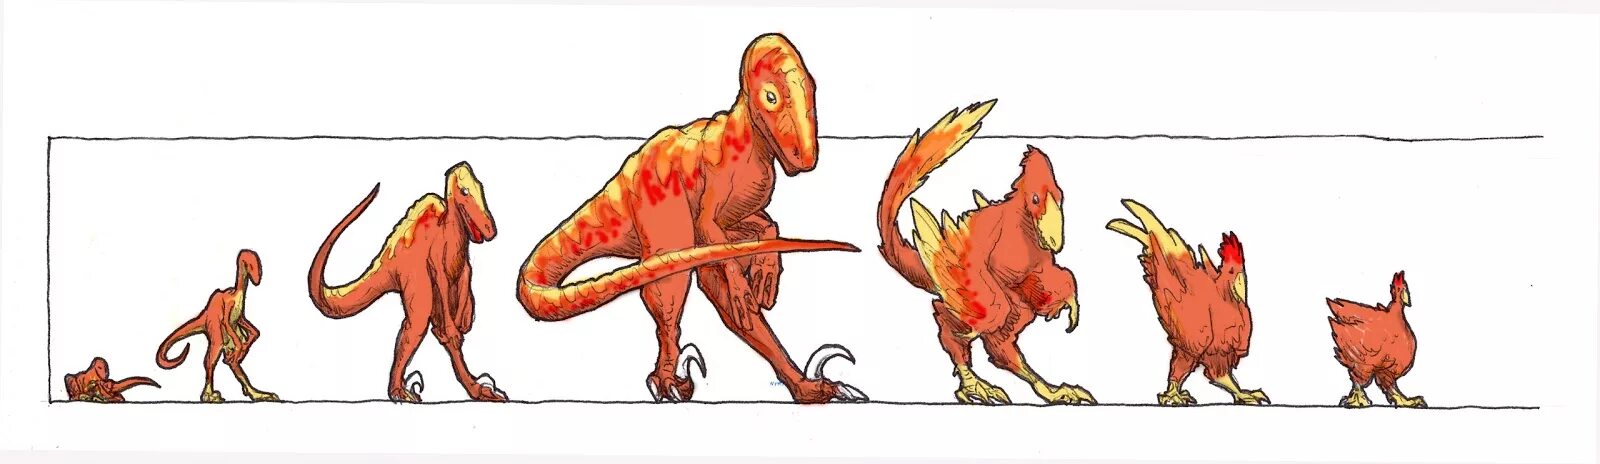 Тиранозавр курица Эволюция. Курица потомок динозавров. Тираннозавр предок курицы. Джек Хорнер Курозавр.